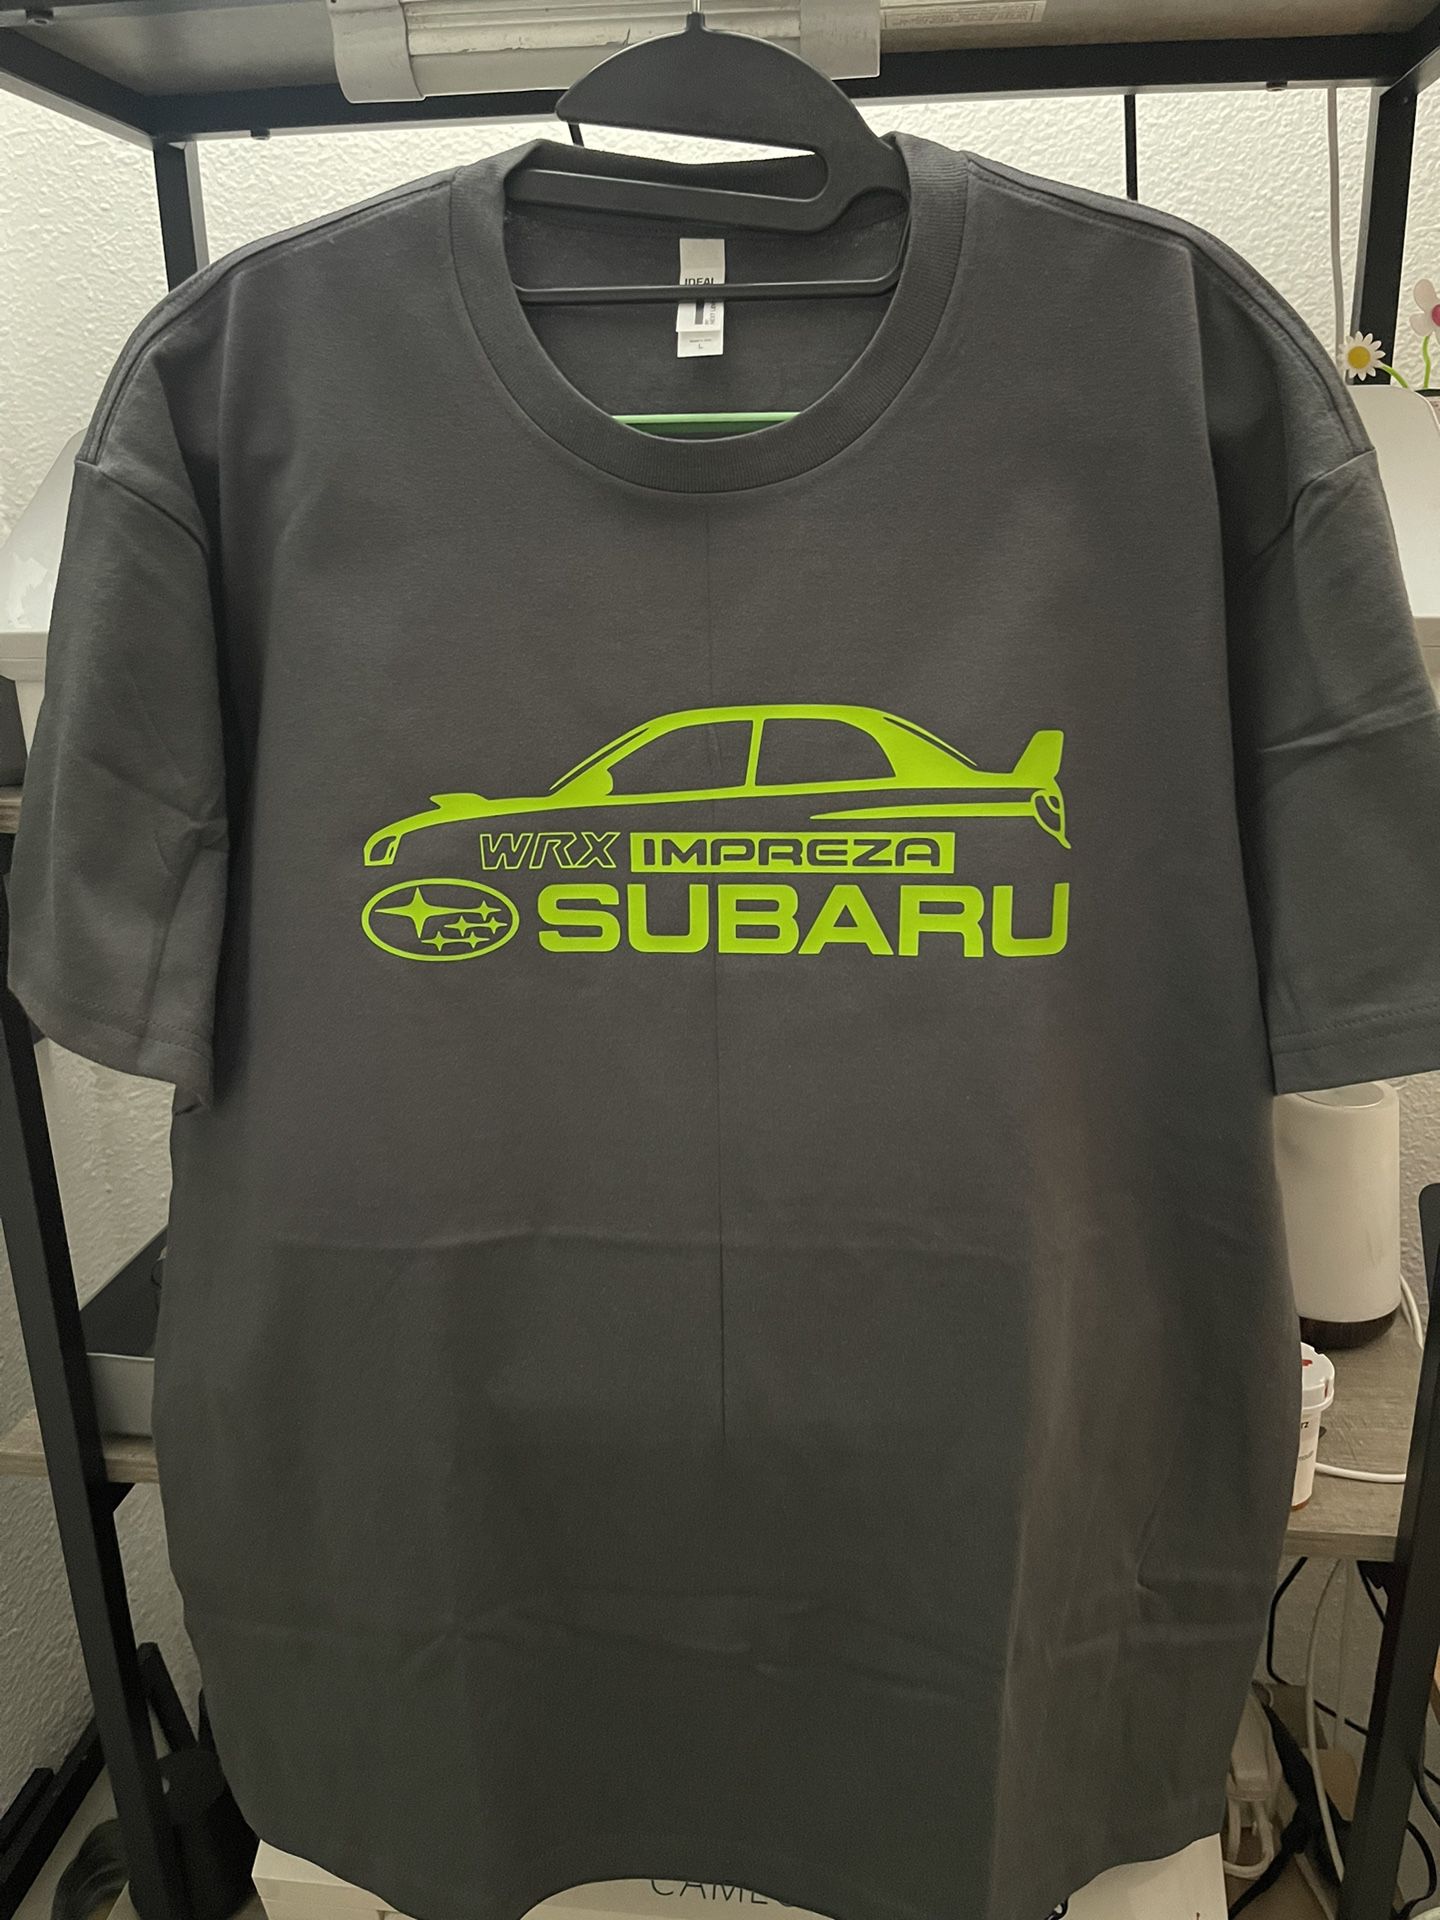 SUBARU WRX Impreza HKS Logo Design Tshirt (Large Size Adult) Army Green Color Shirt.